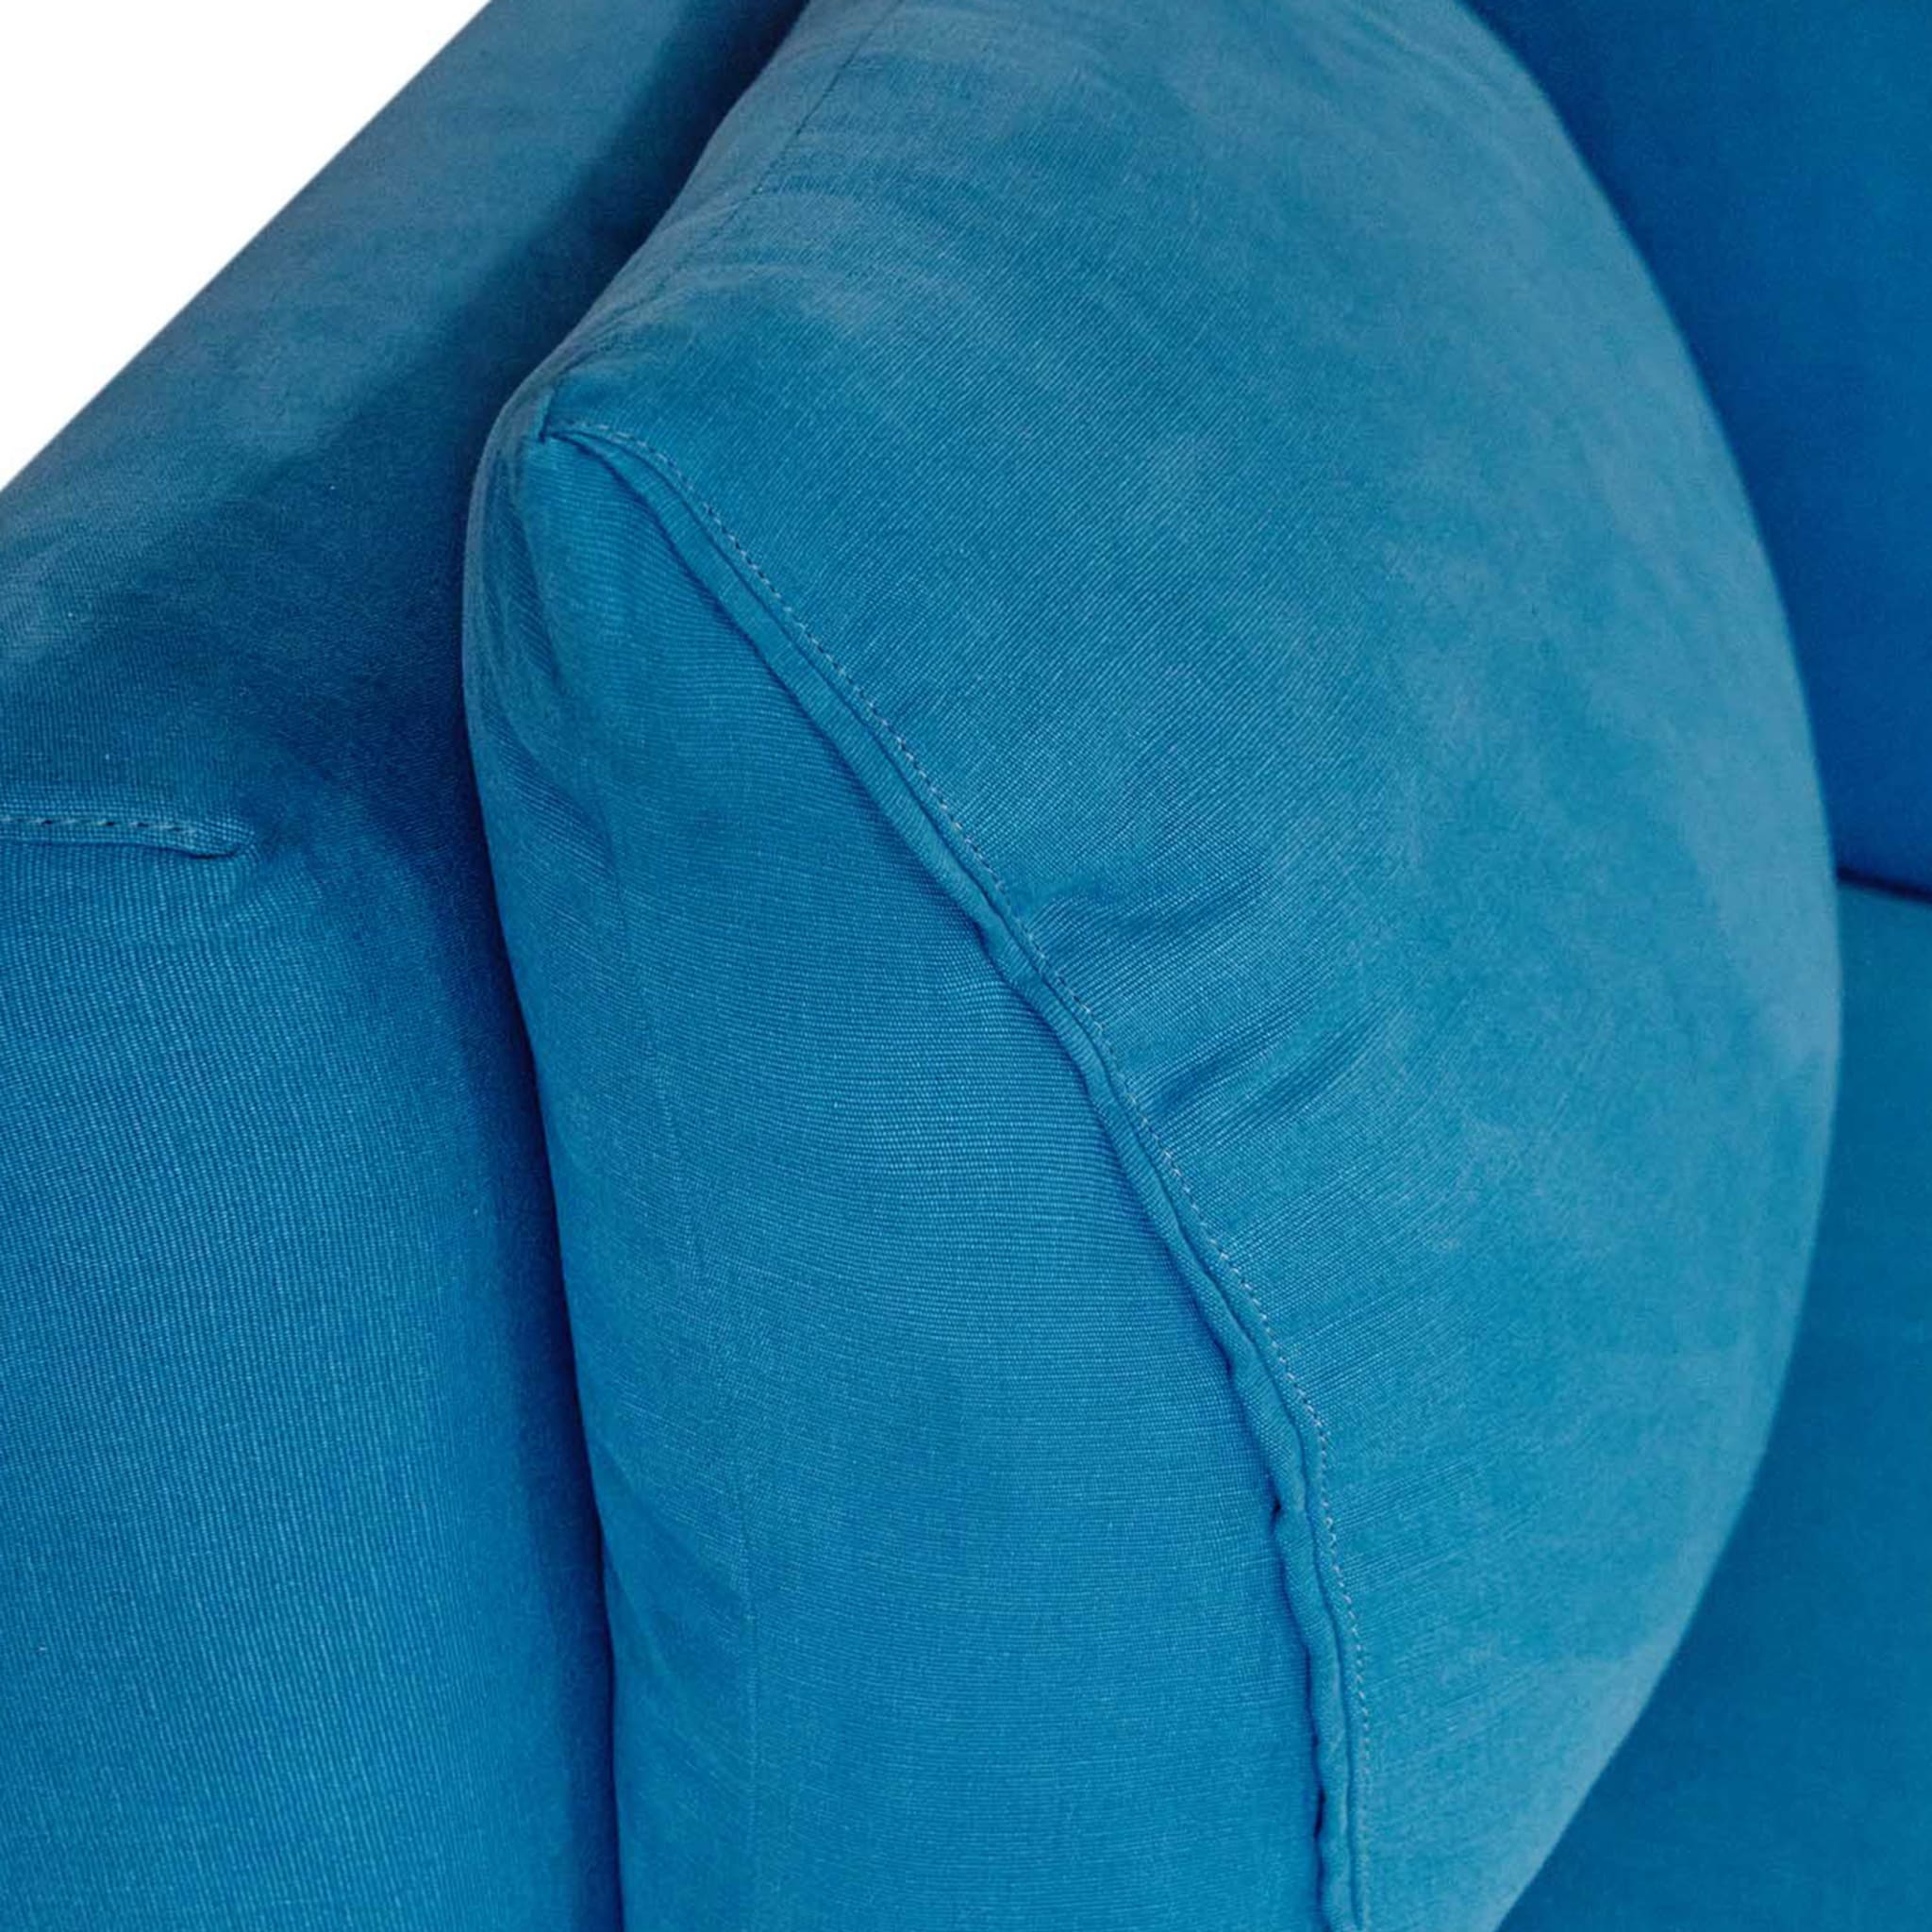 Casquet in Peacock Blue Sofa - Alternative view 3